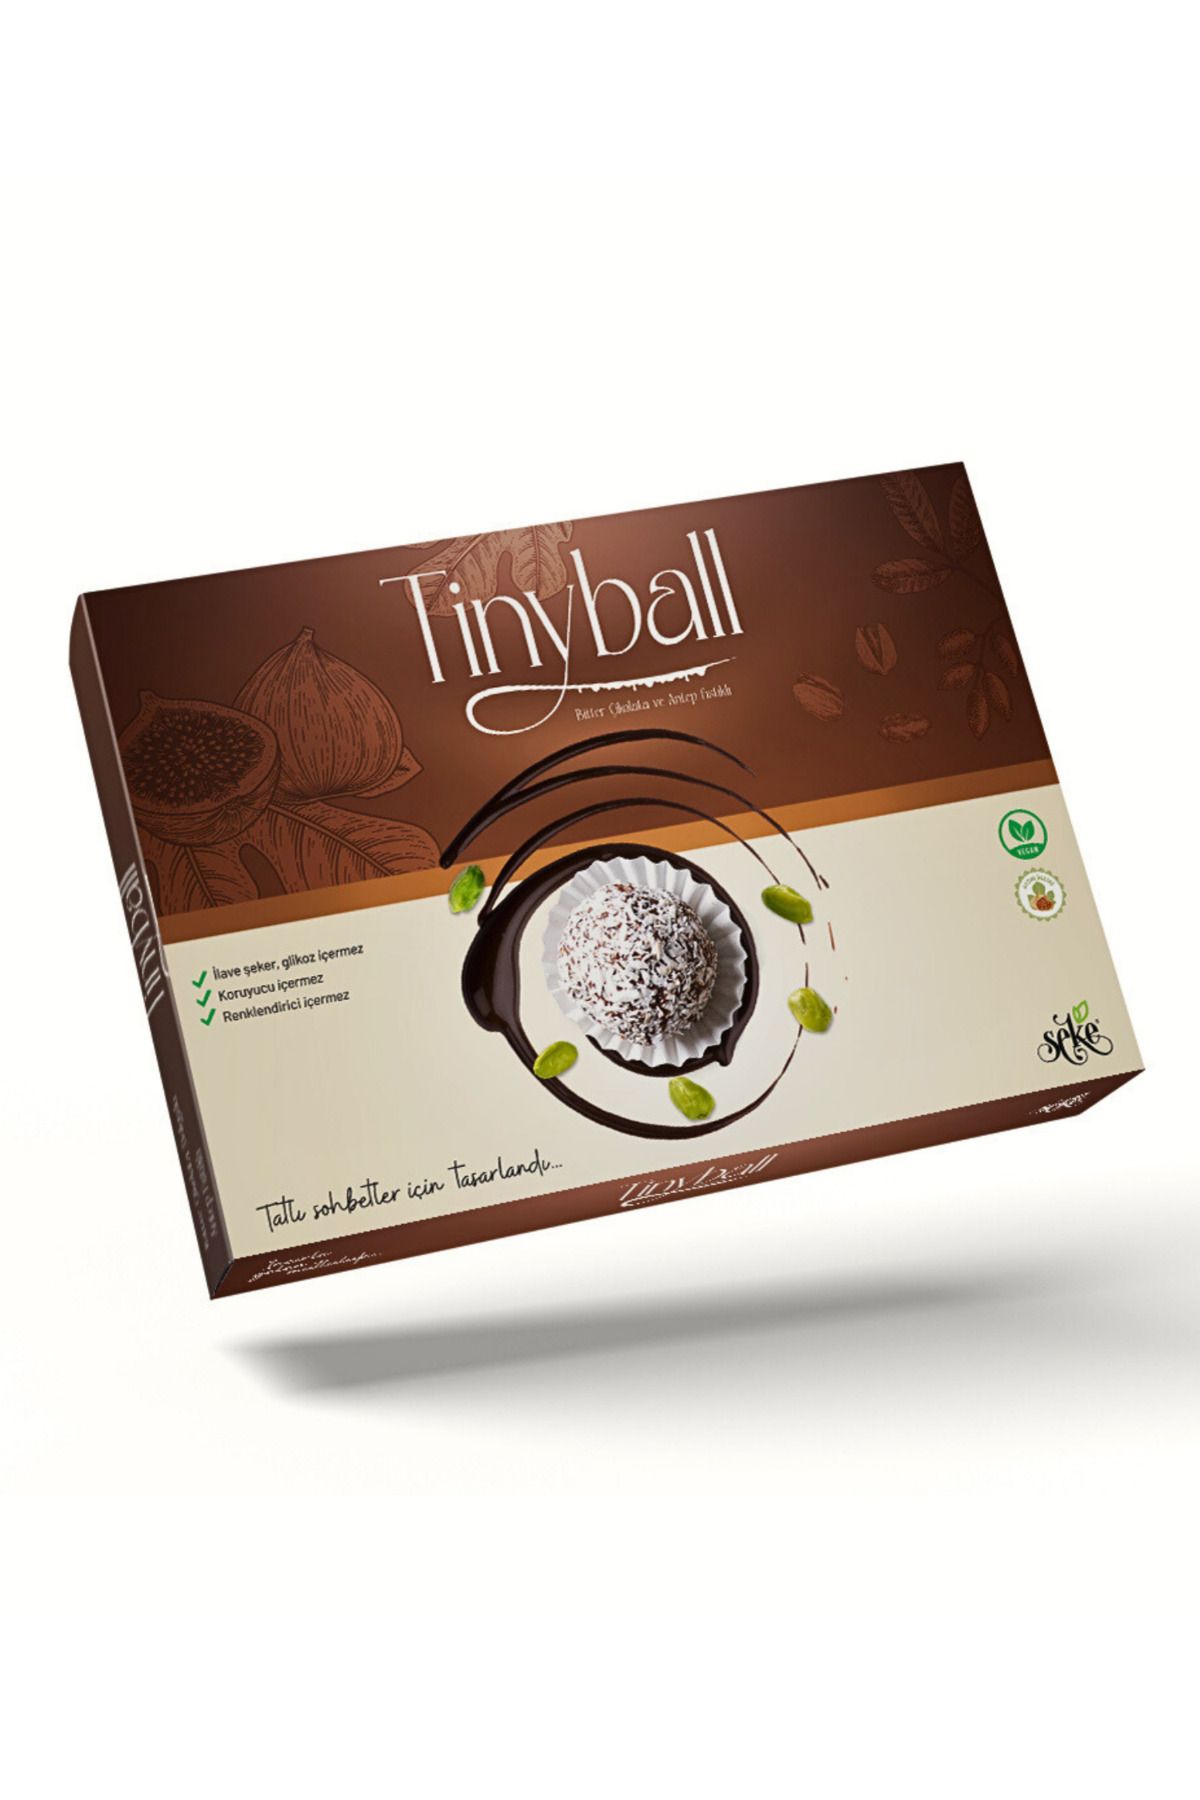 SEKE Tinyball - Bitter Çikolata & Antep Fıstıklı Kuru Incir Net 215 G